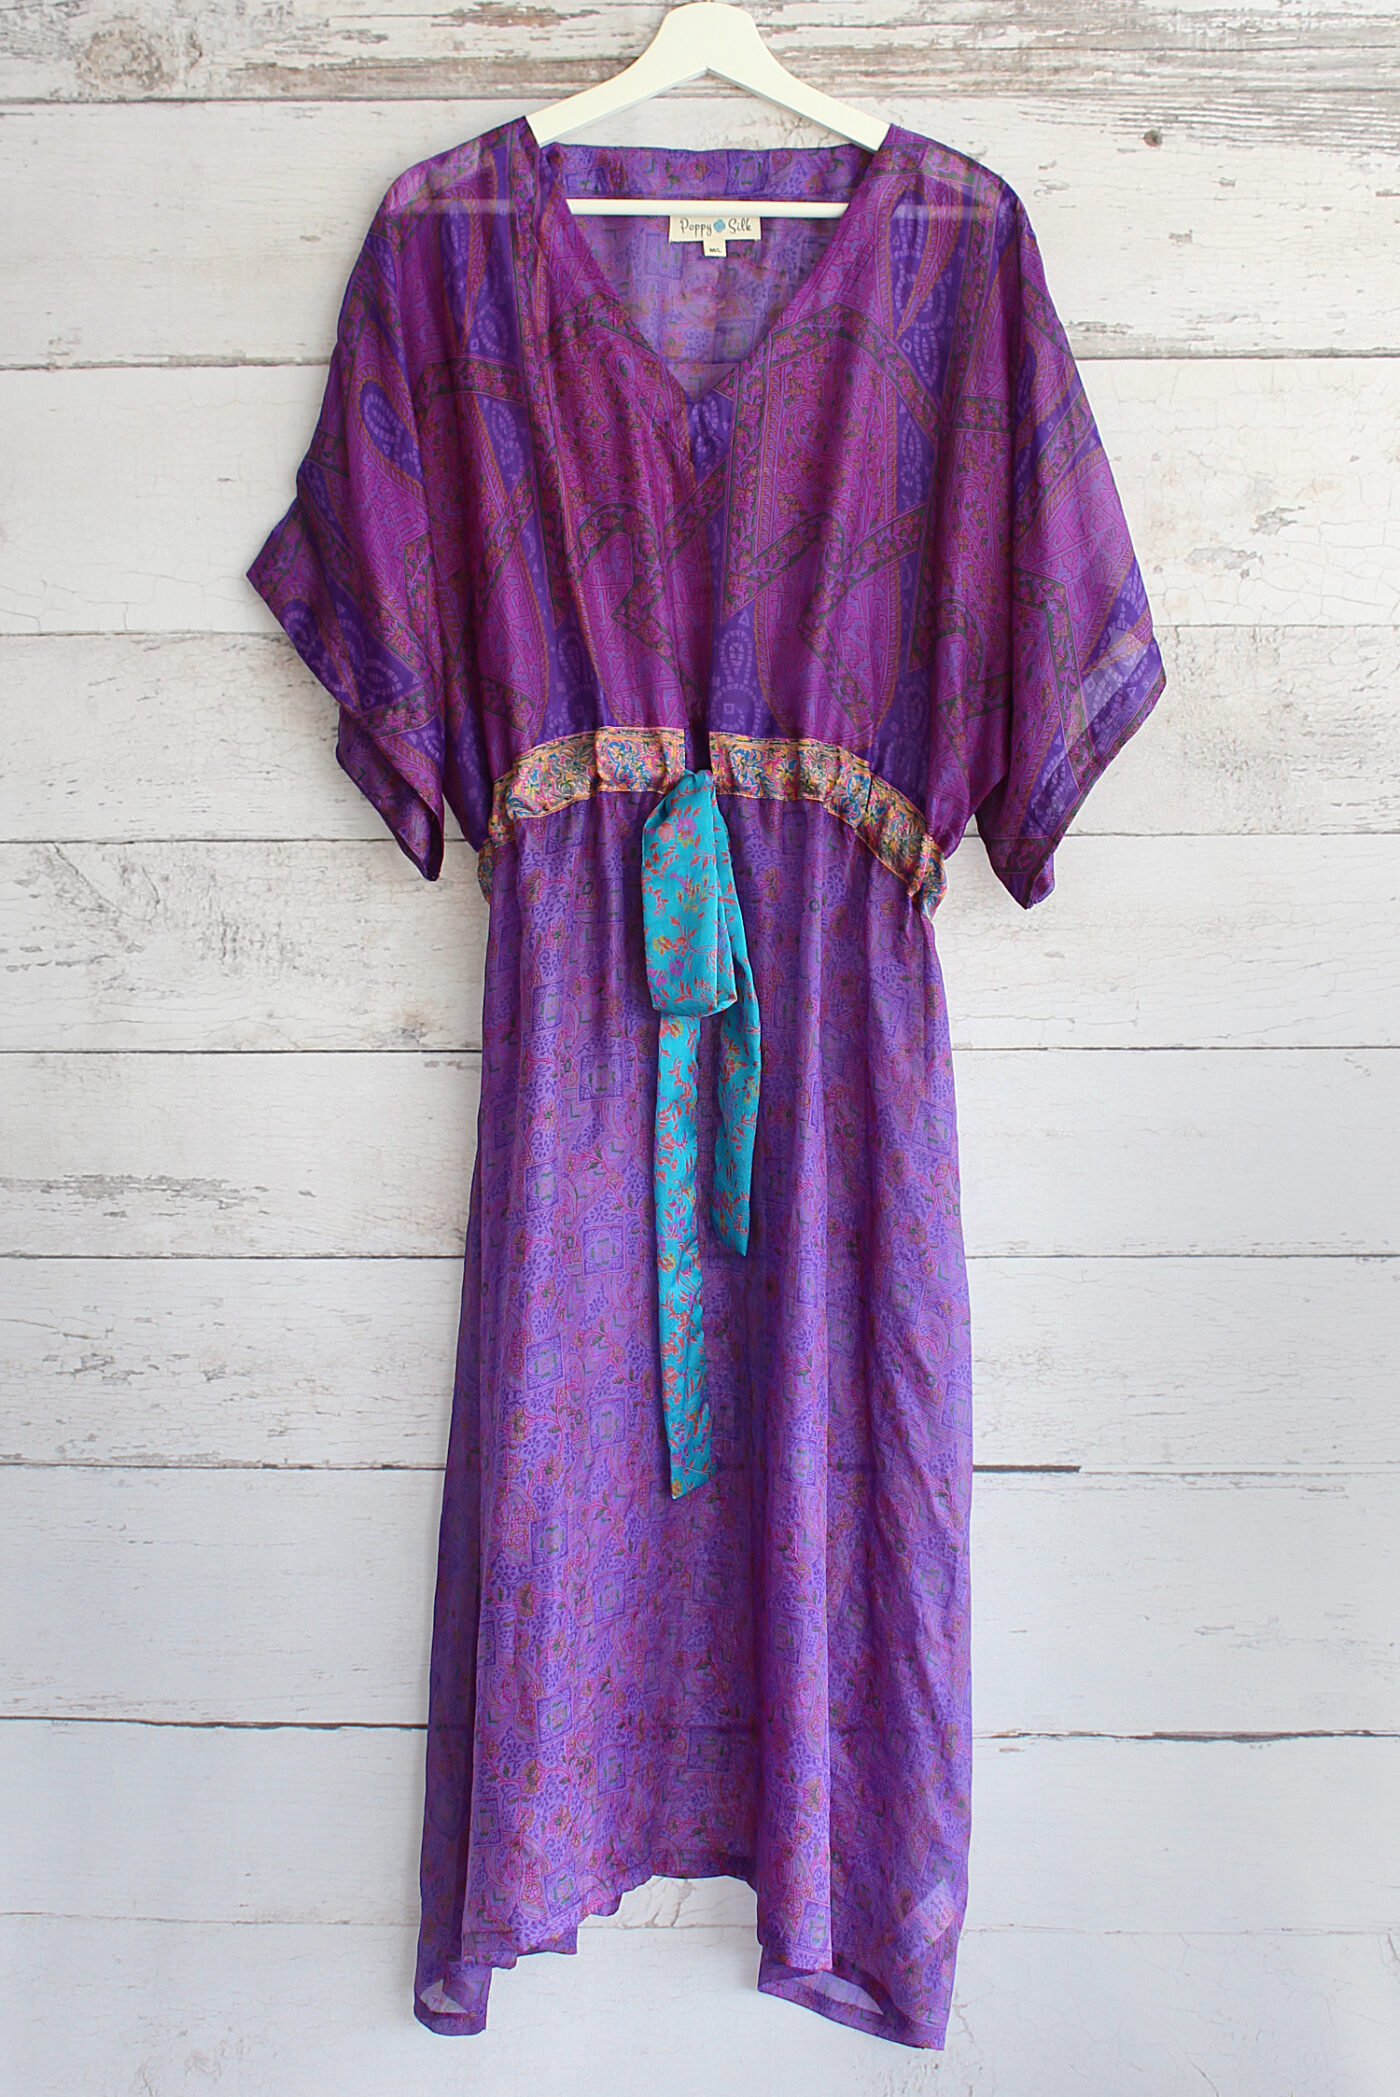 Jacinda Recycled Silk Sari Print Dress J33